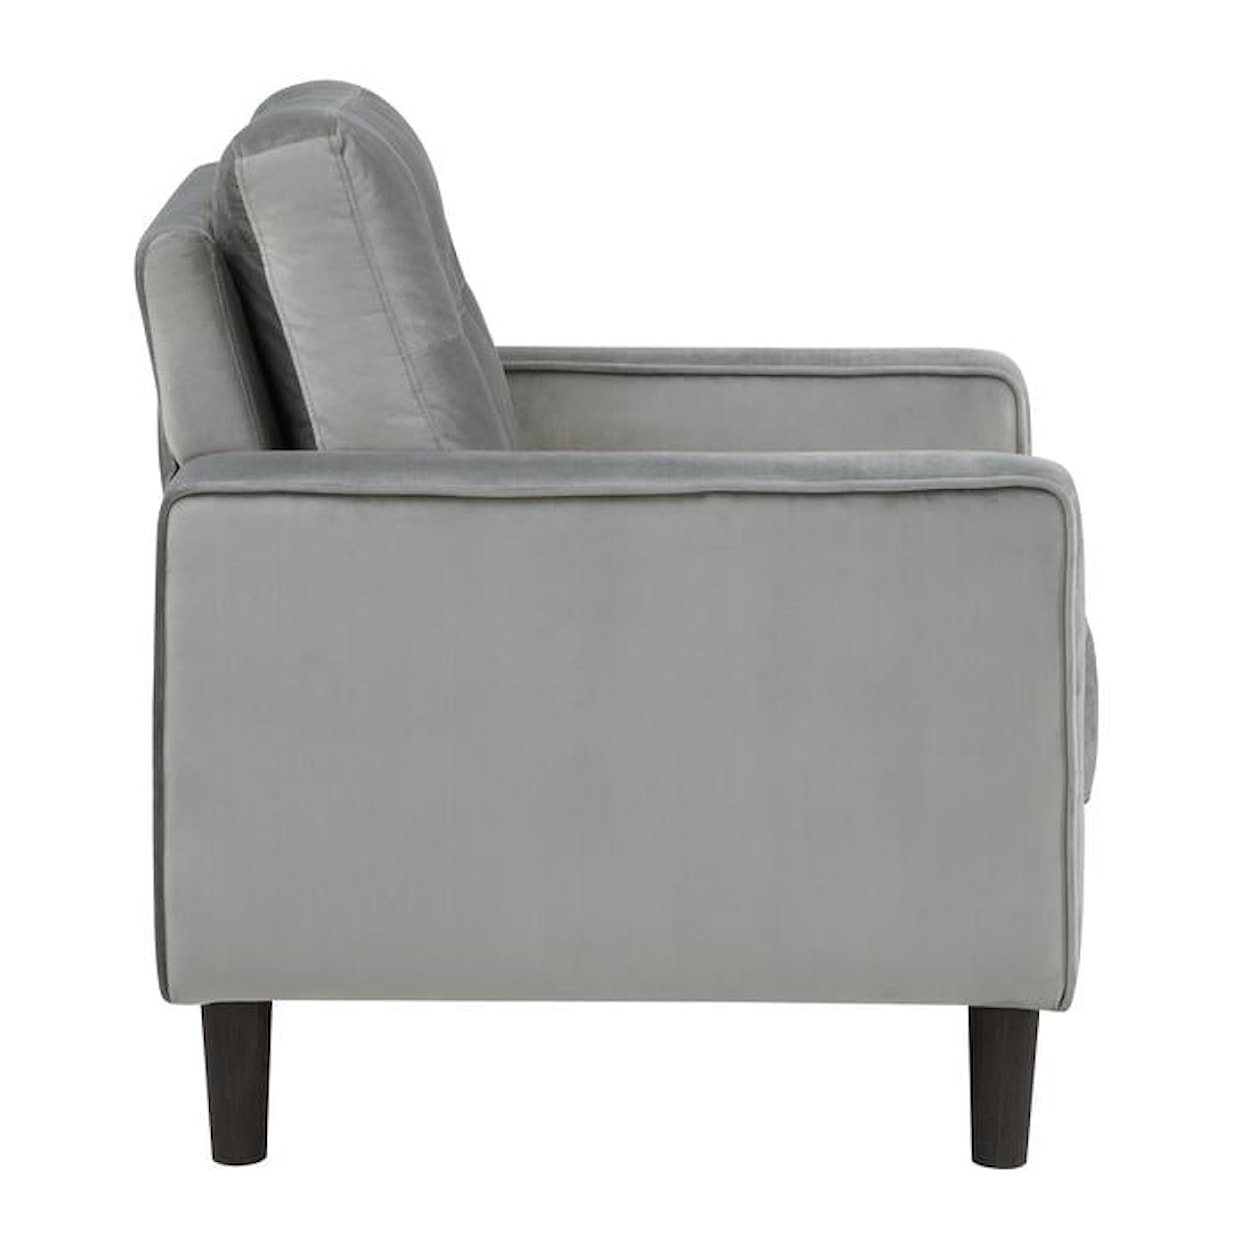 Homelegance Furniture Beven Chair